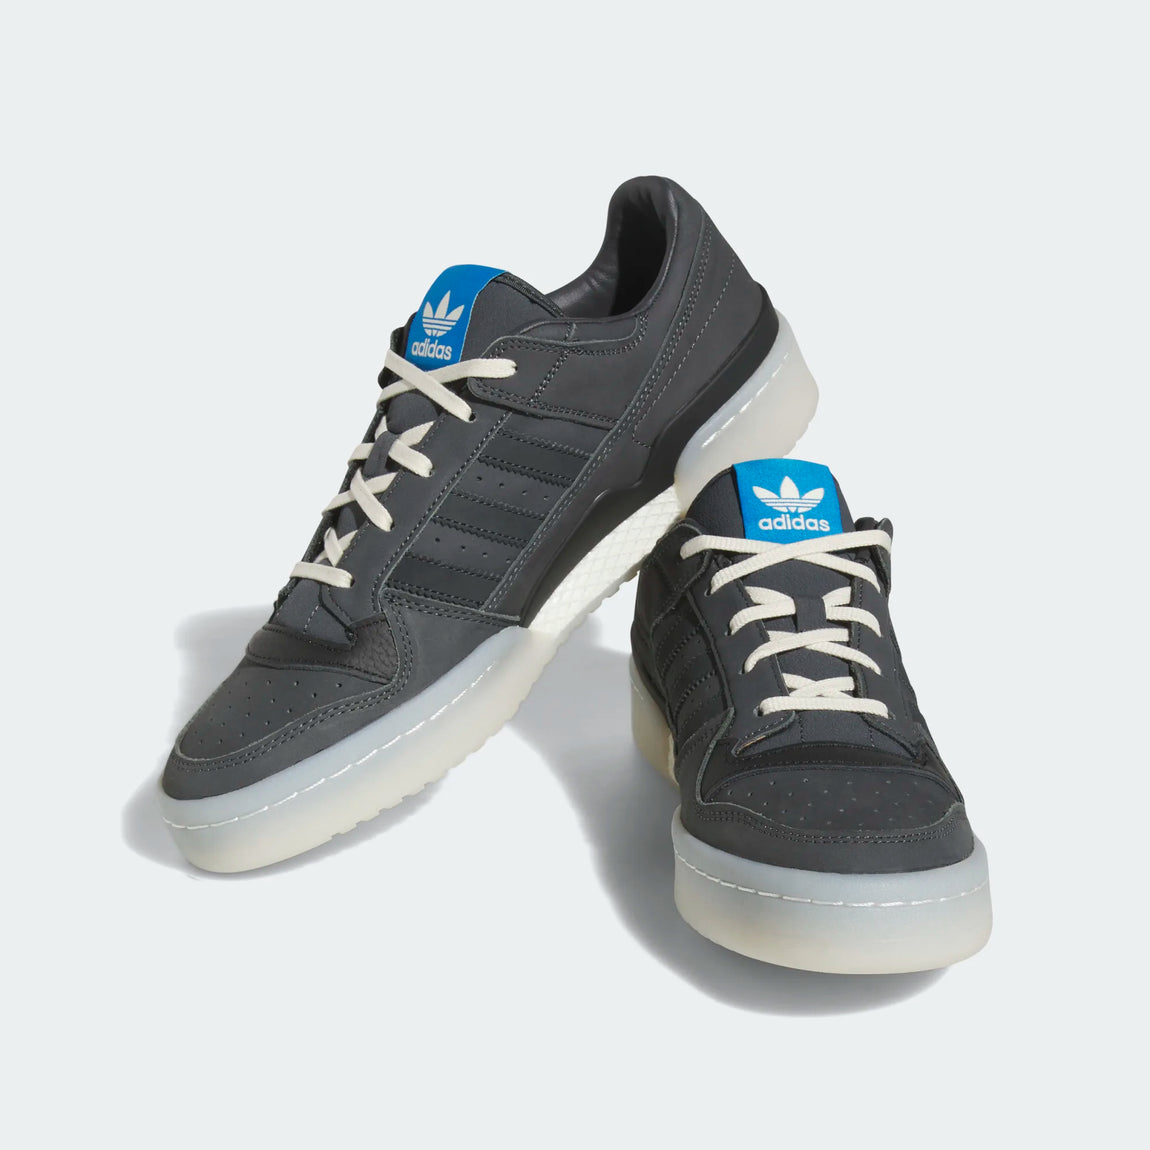 Adidas Forum Low CL (Solid Grey/Carbon/Core Black) - Adidas Forum Low CL (Solid Grey/Carbon/Core Black) - 